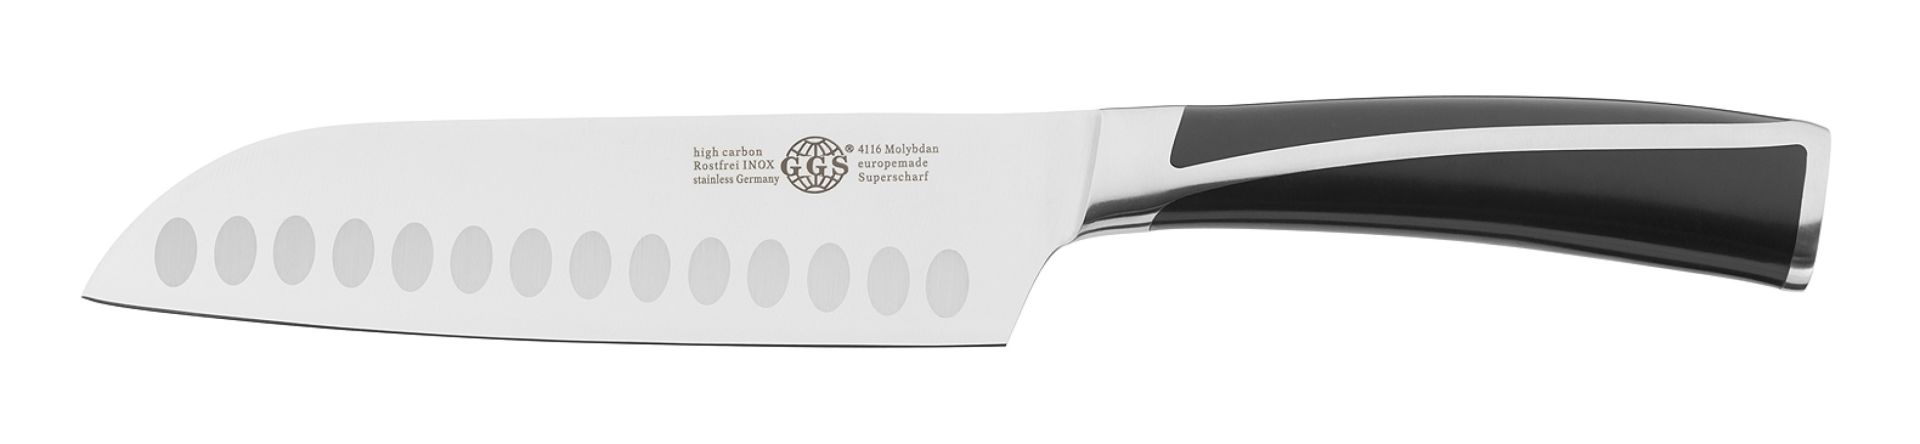 GGS Solingen Chefline Santokumeser Şef Bıçağı